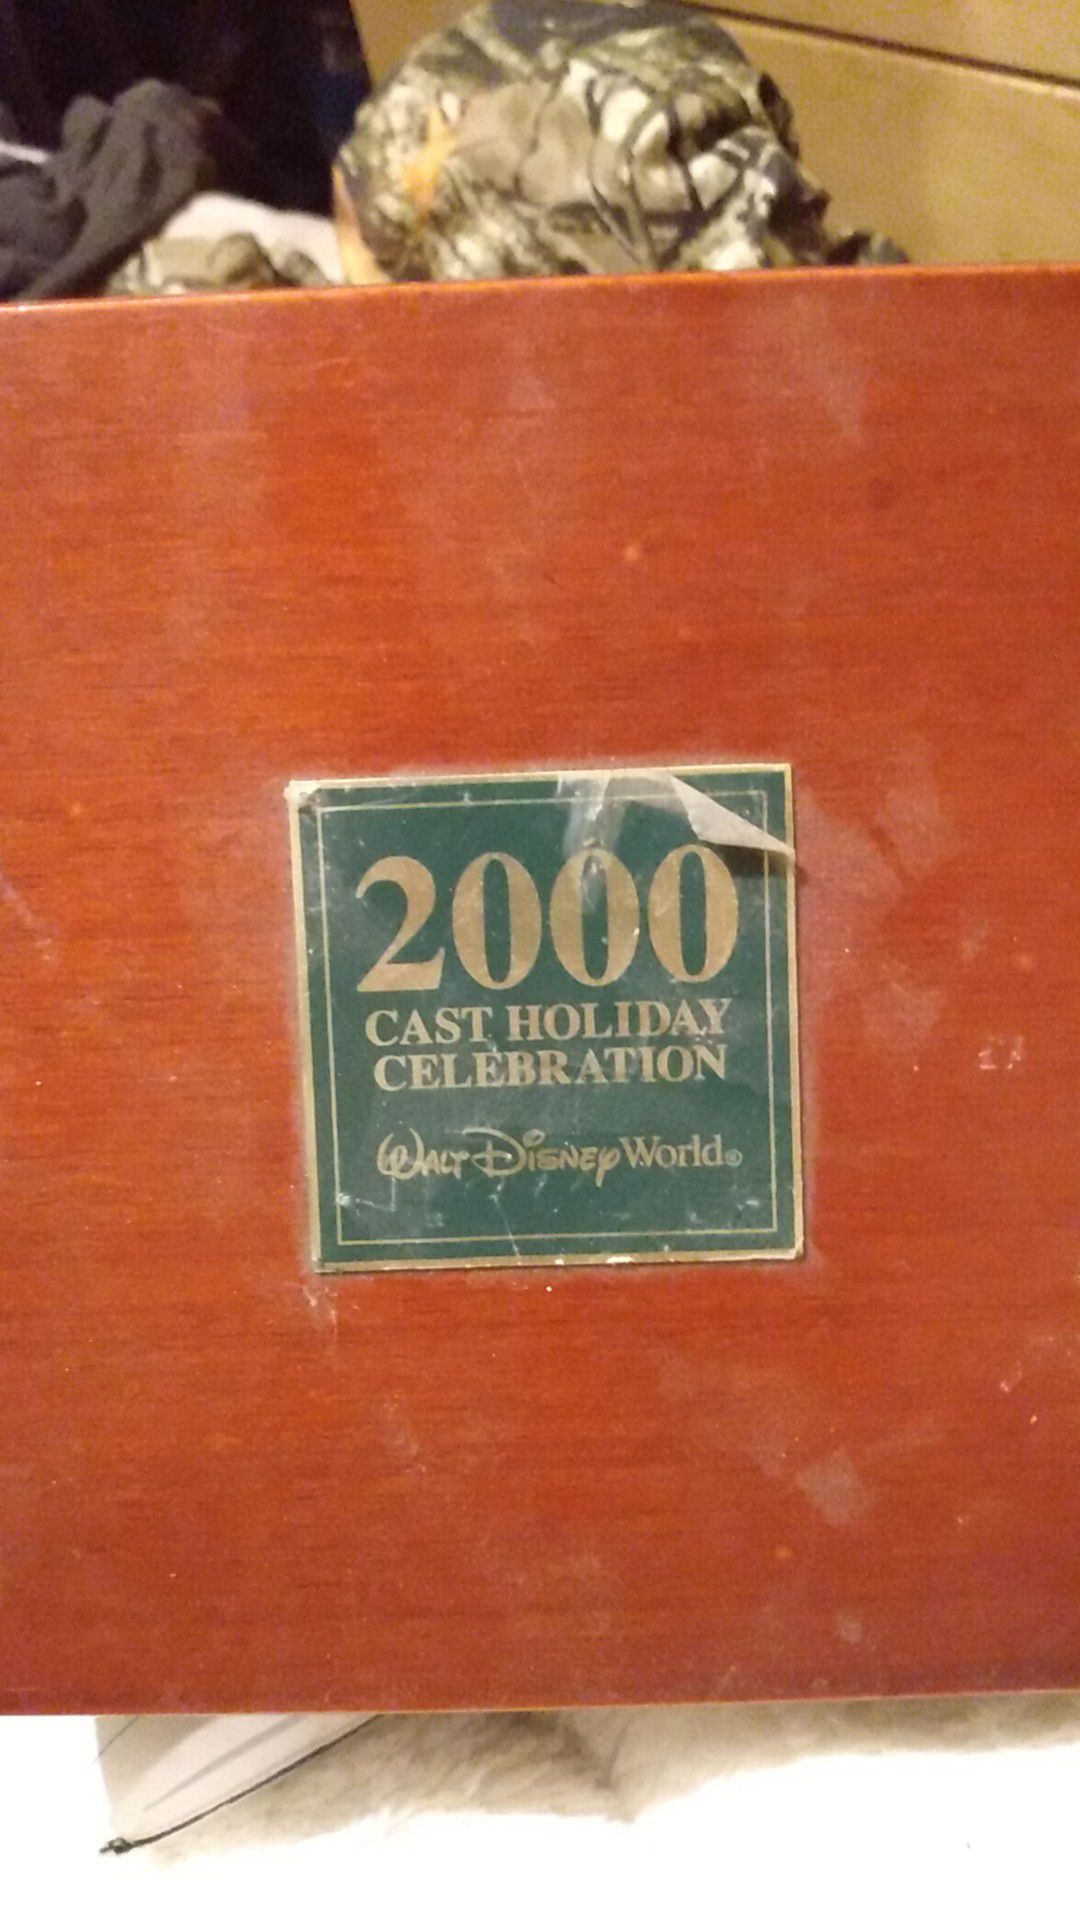 Cast holiday celebration pins from 2000 Walt Disney world